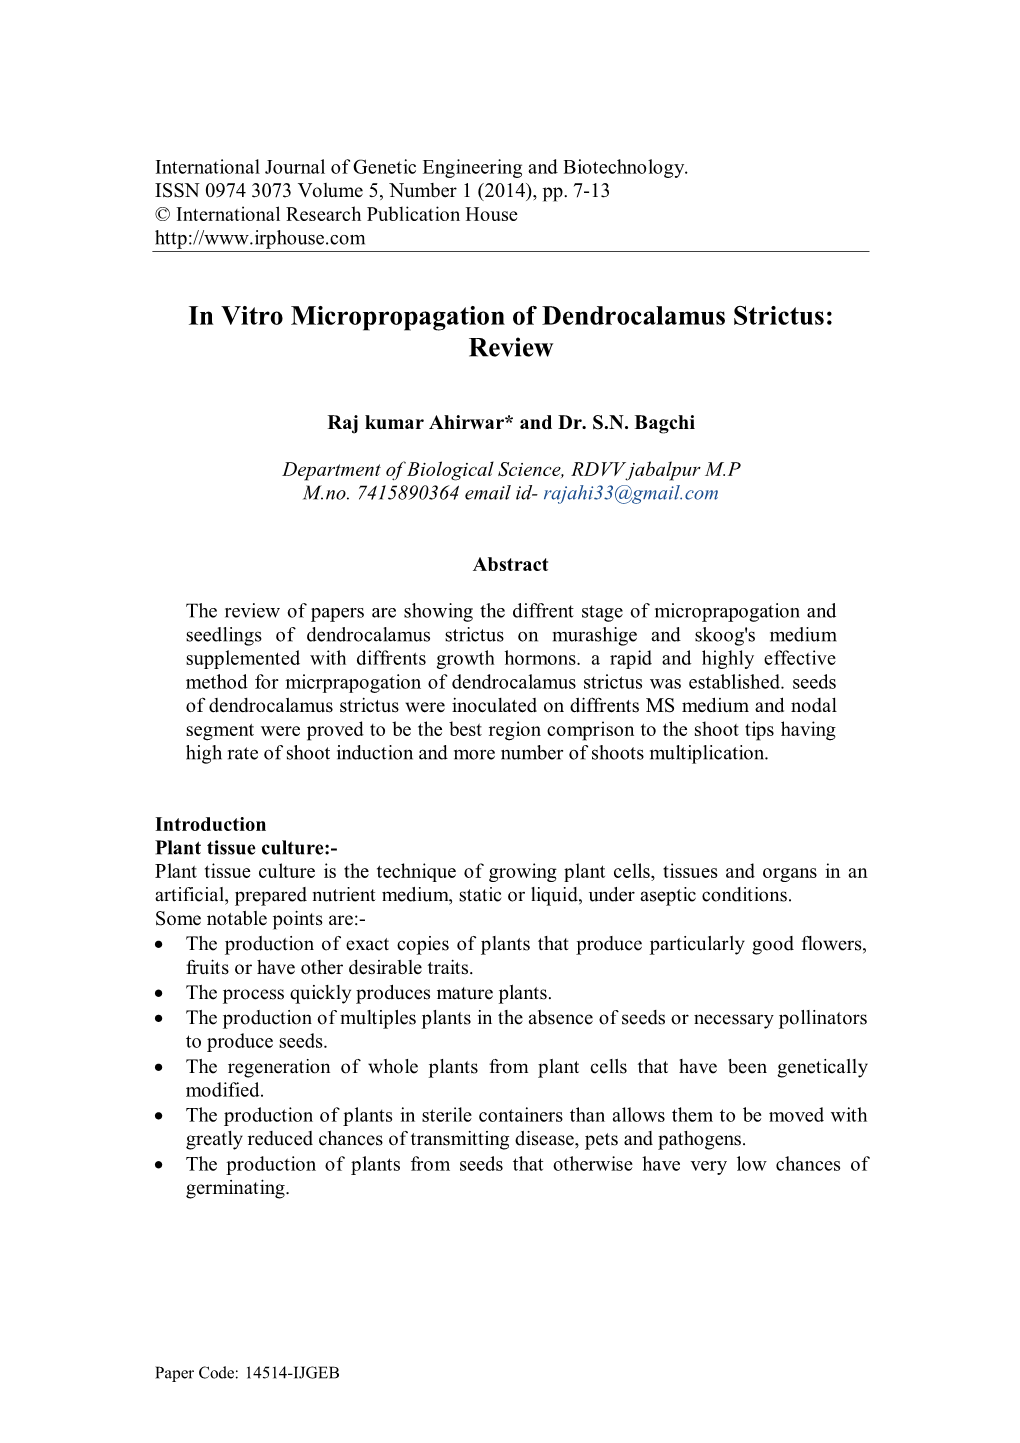 In Vitro Micropropagation of Dendrocalamus Strictus: Review